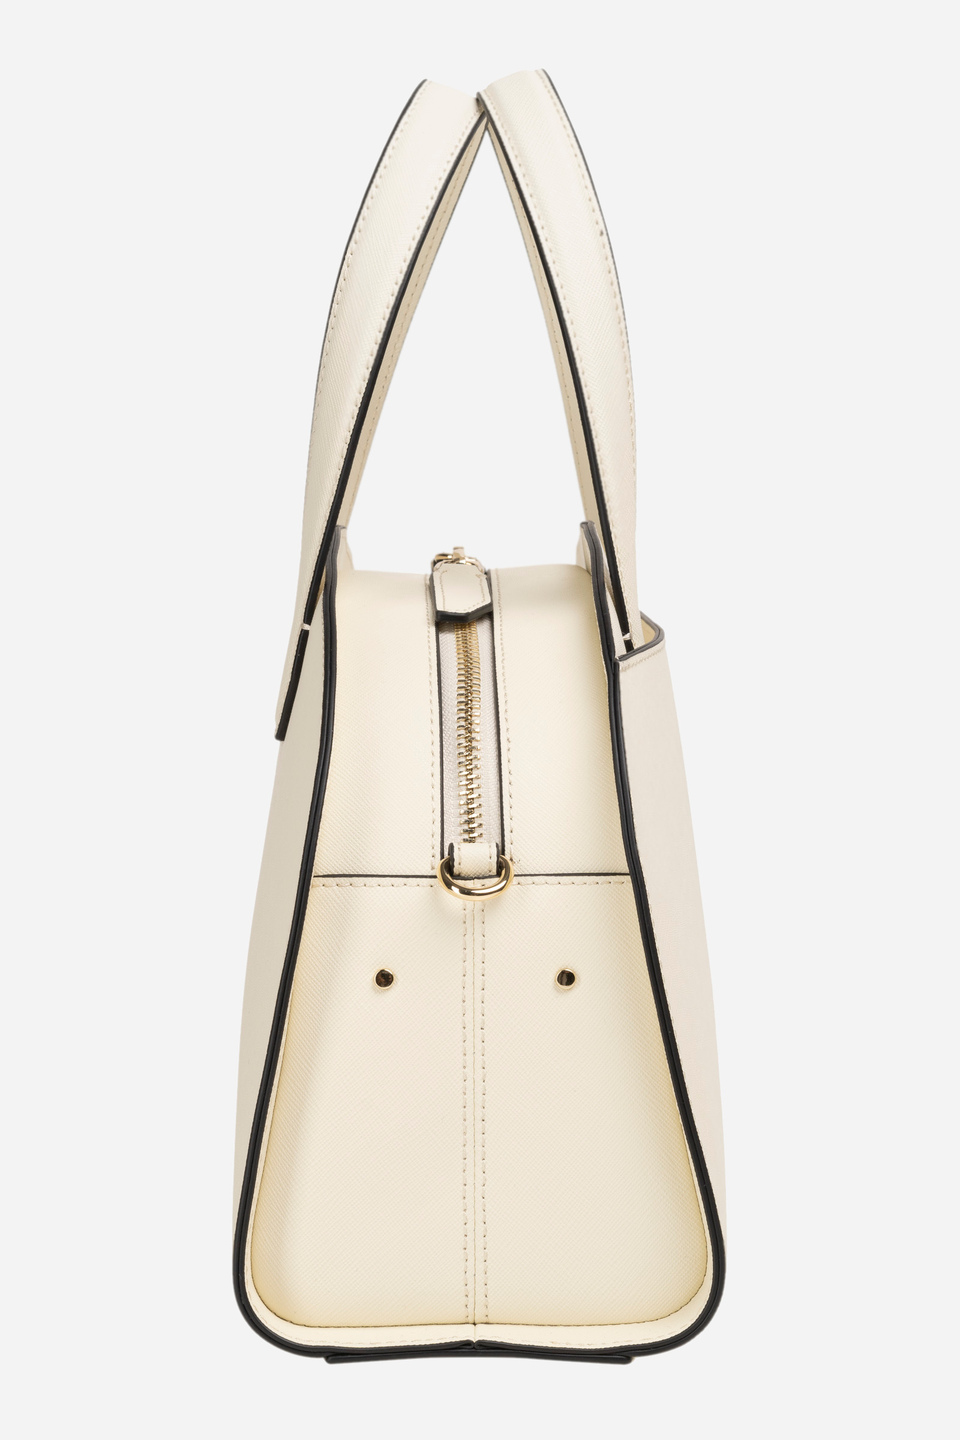 Leather handbag - Karina | La Martina - Official Online Shop